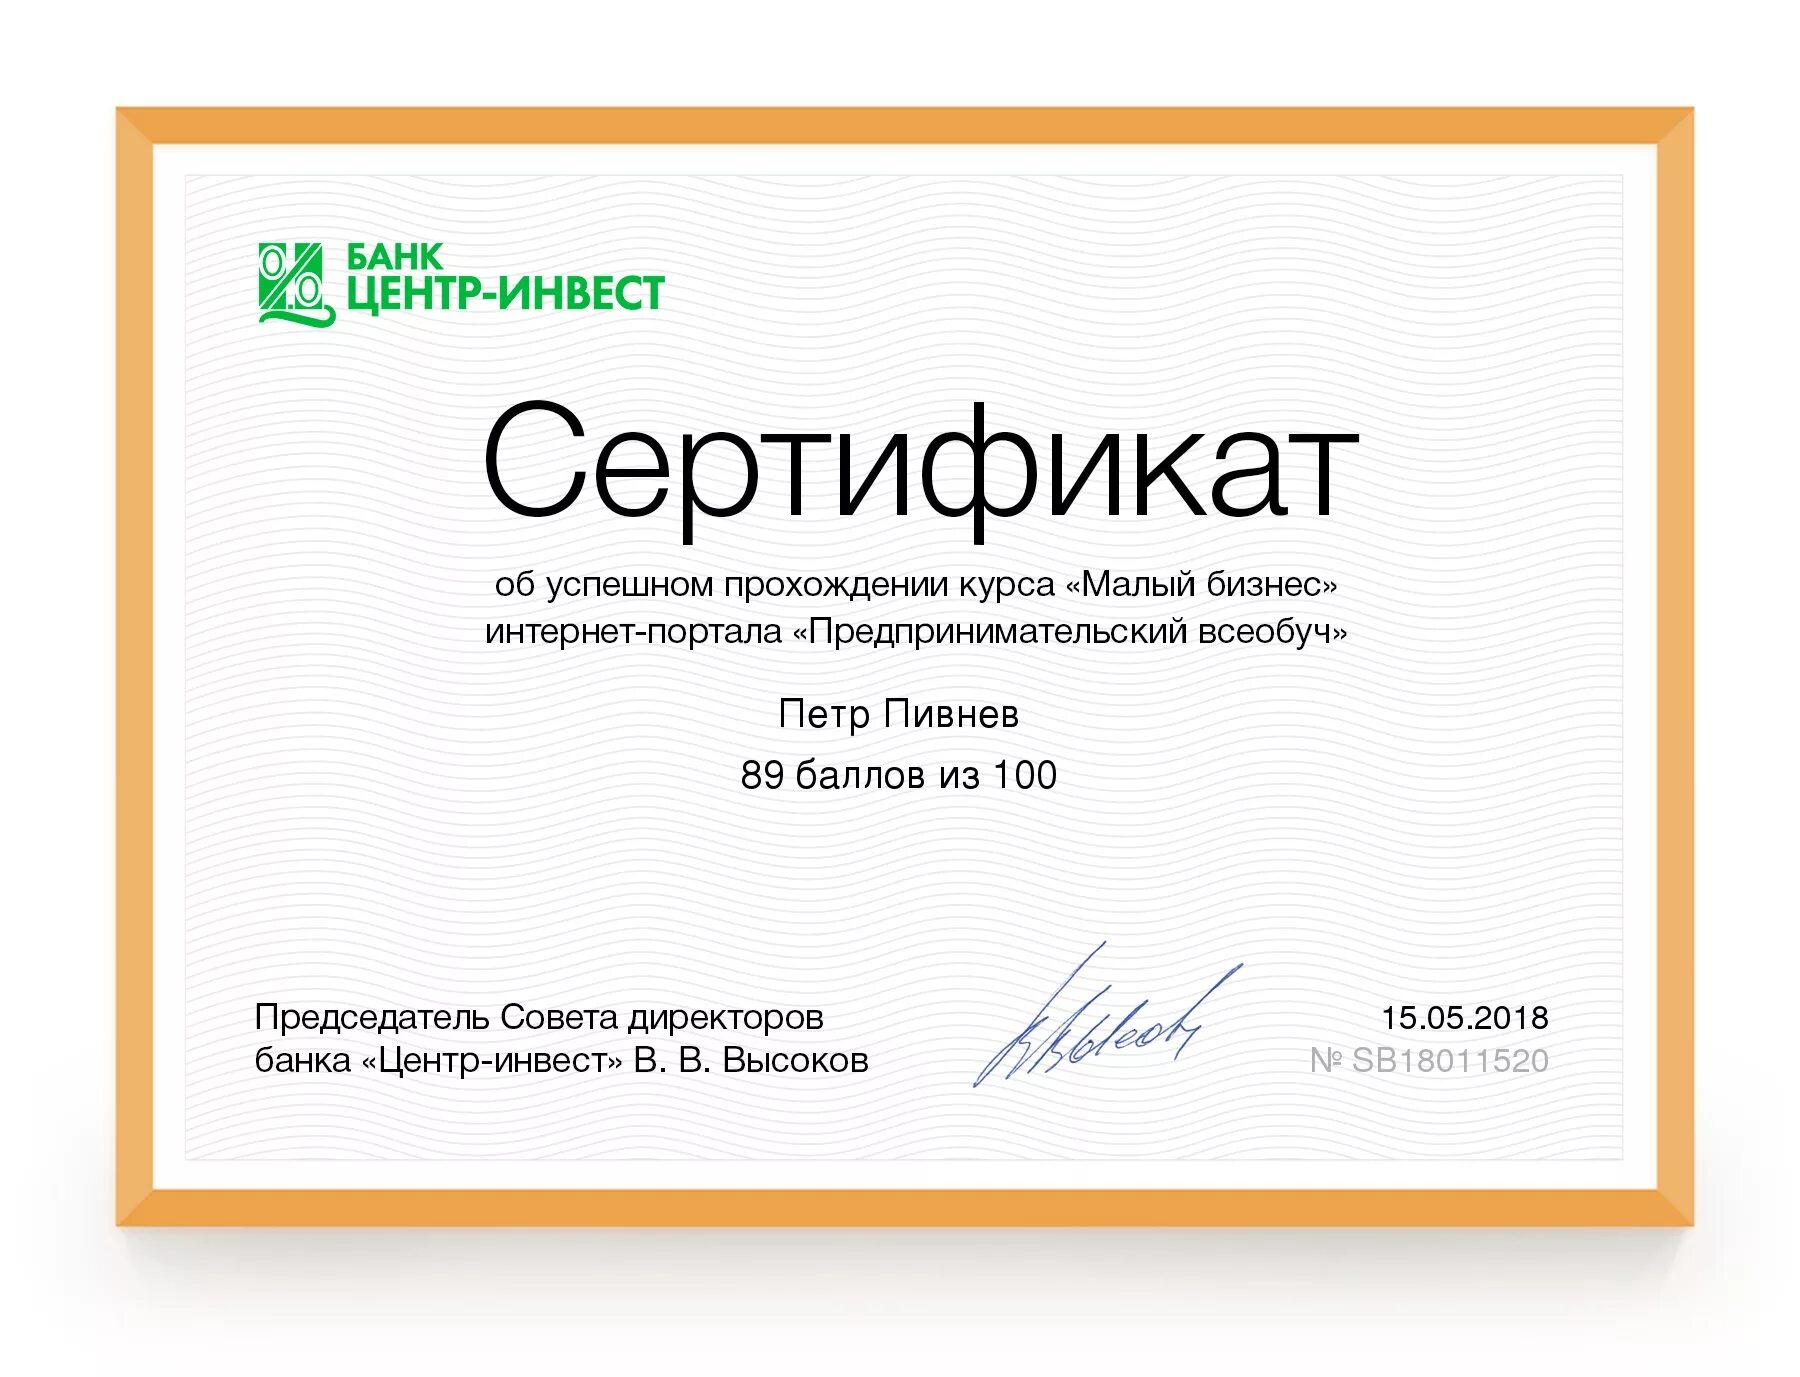 Сертификат. Сертификат о прохождении. Сертификат о прохождении курса. Сертификат бизнес.